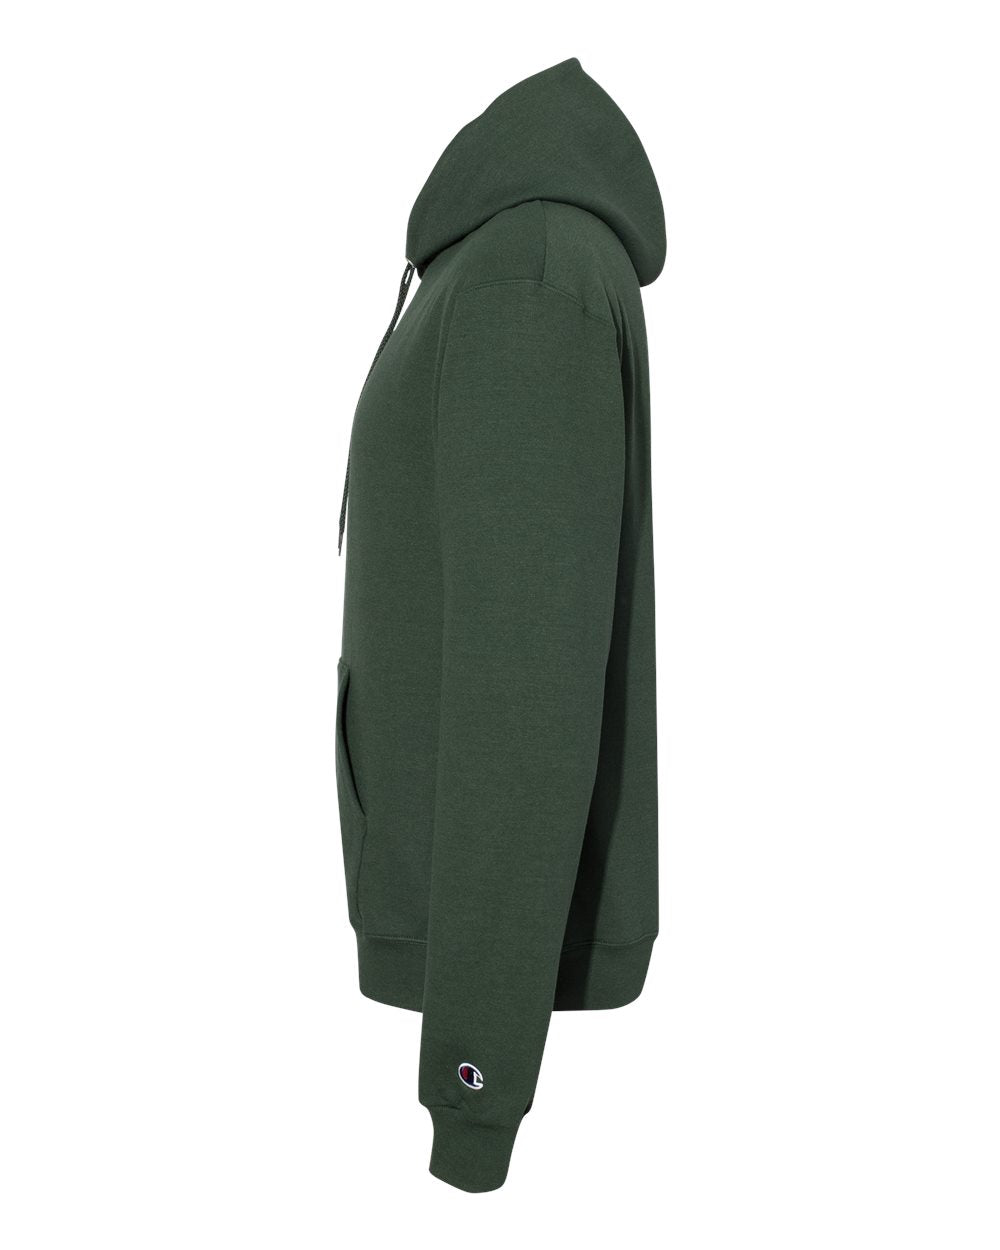 Champion Powerblend® Hooded Sweatshirt S700 #color_Dark Green